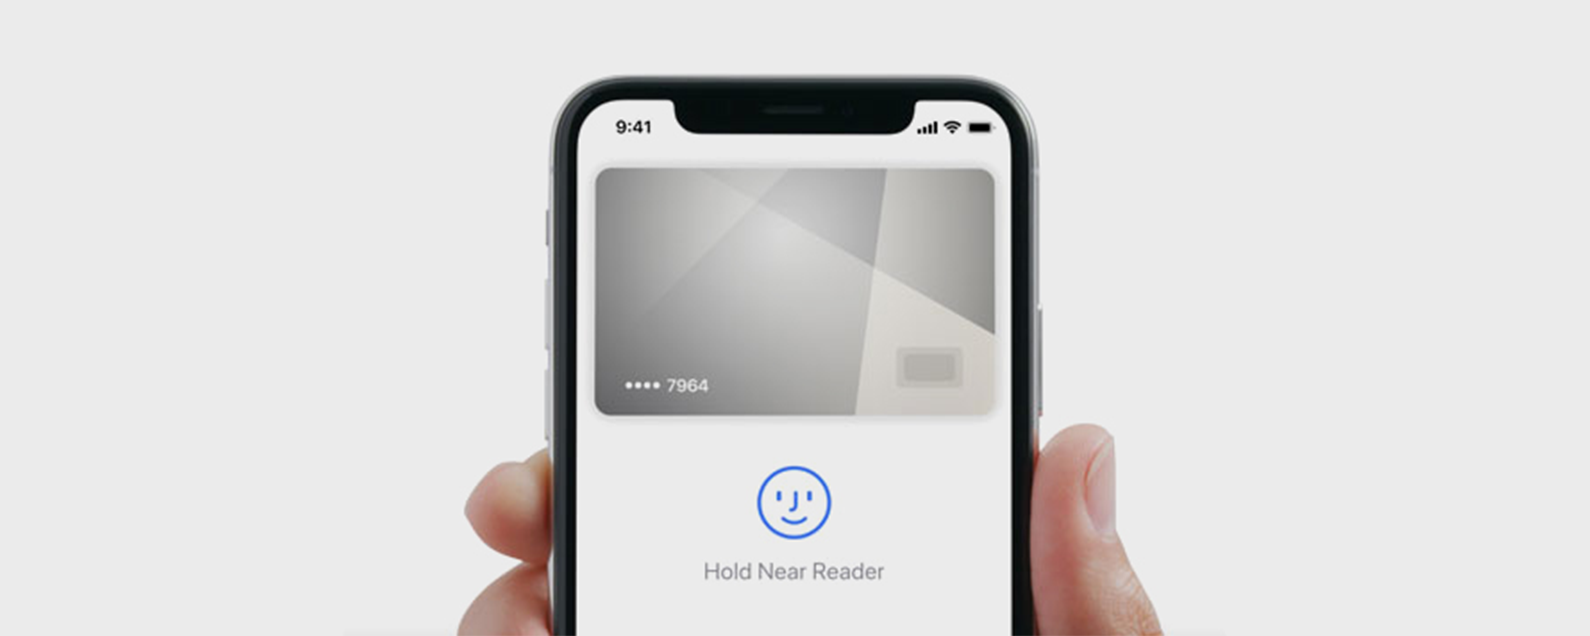 Add u. Apple pay face ID. Как оплатить картой face ID. Apple pay face ID как пользоваться. Hold near Reader.